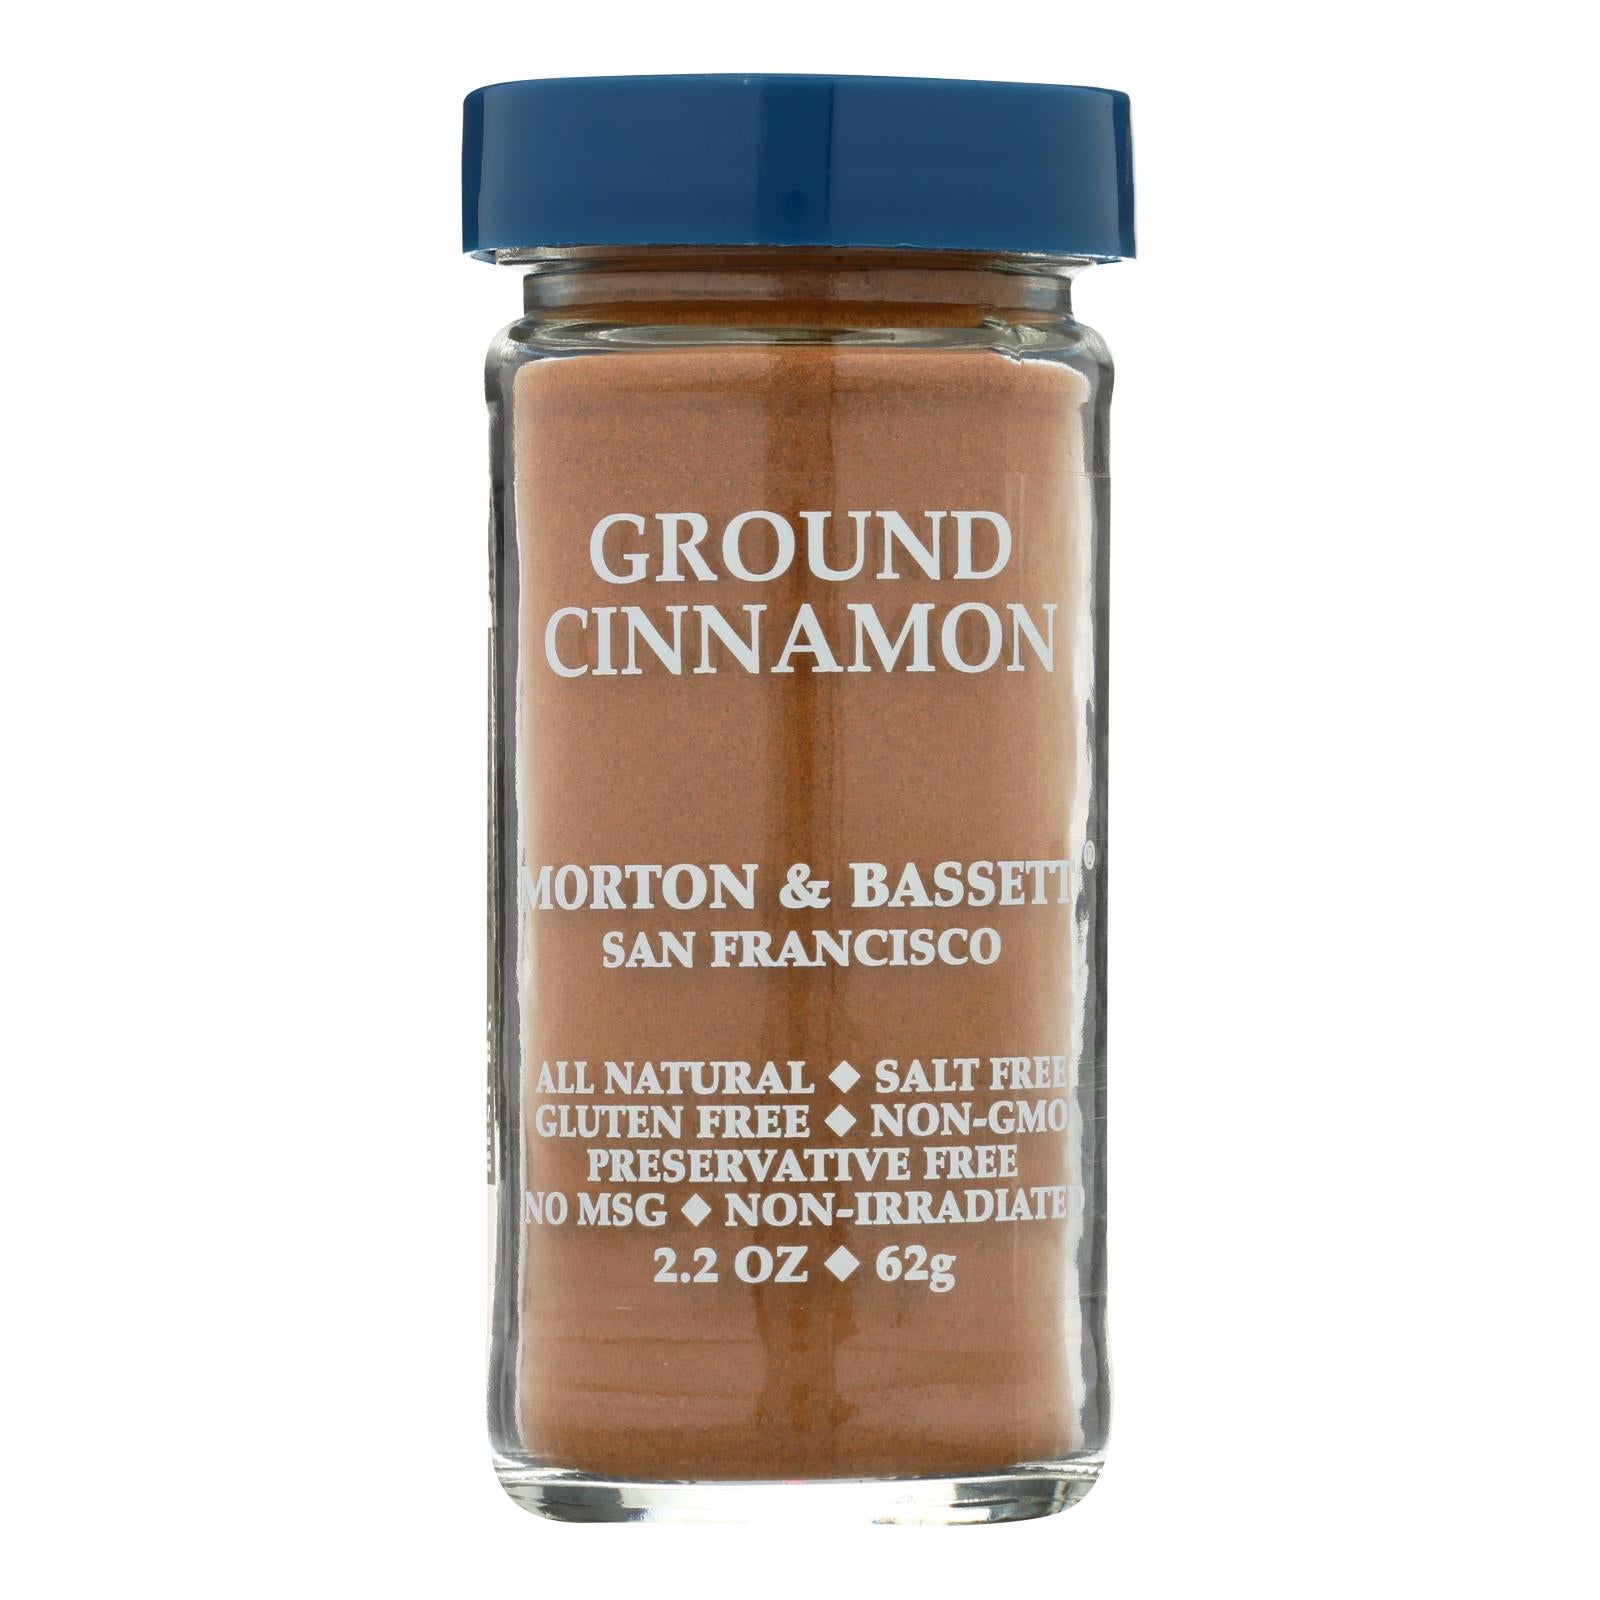 Morton And Bassett Seasoning - Cinnamon - Ground - 2.7 Oz - Case Of 3